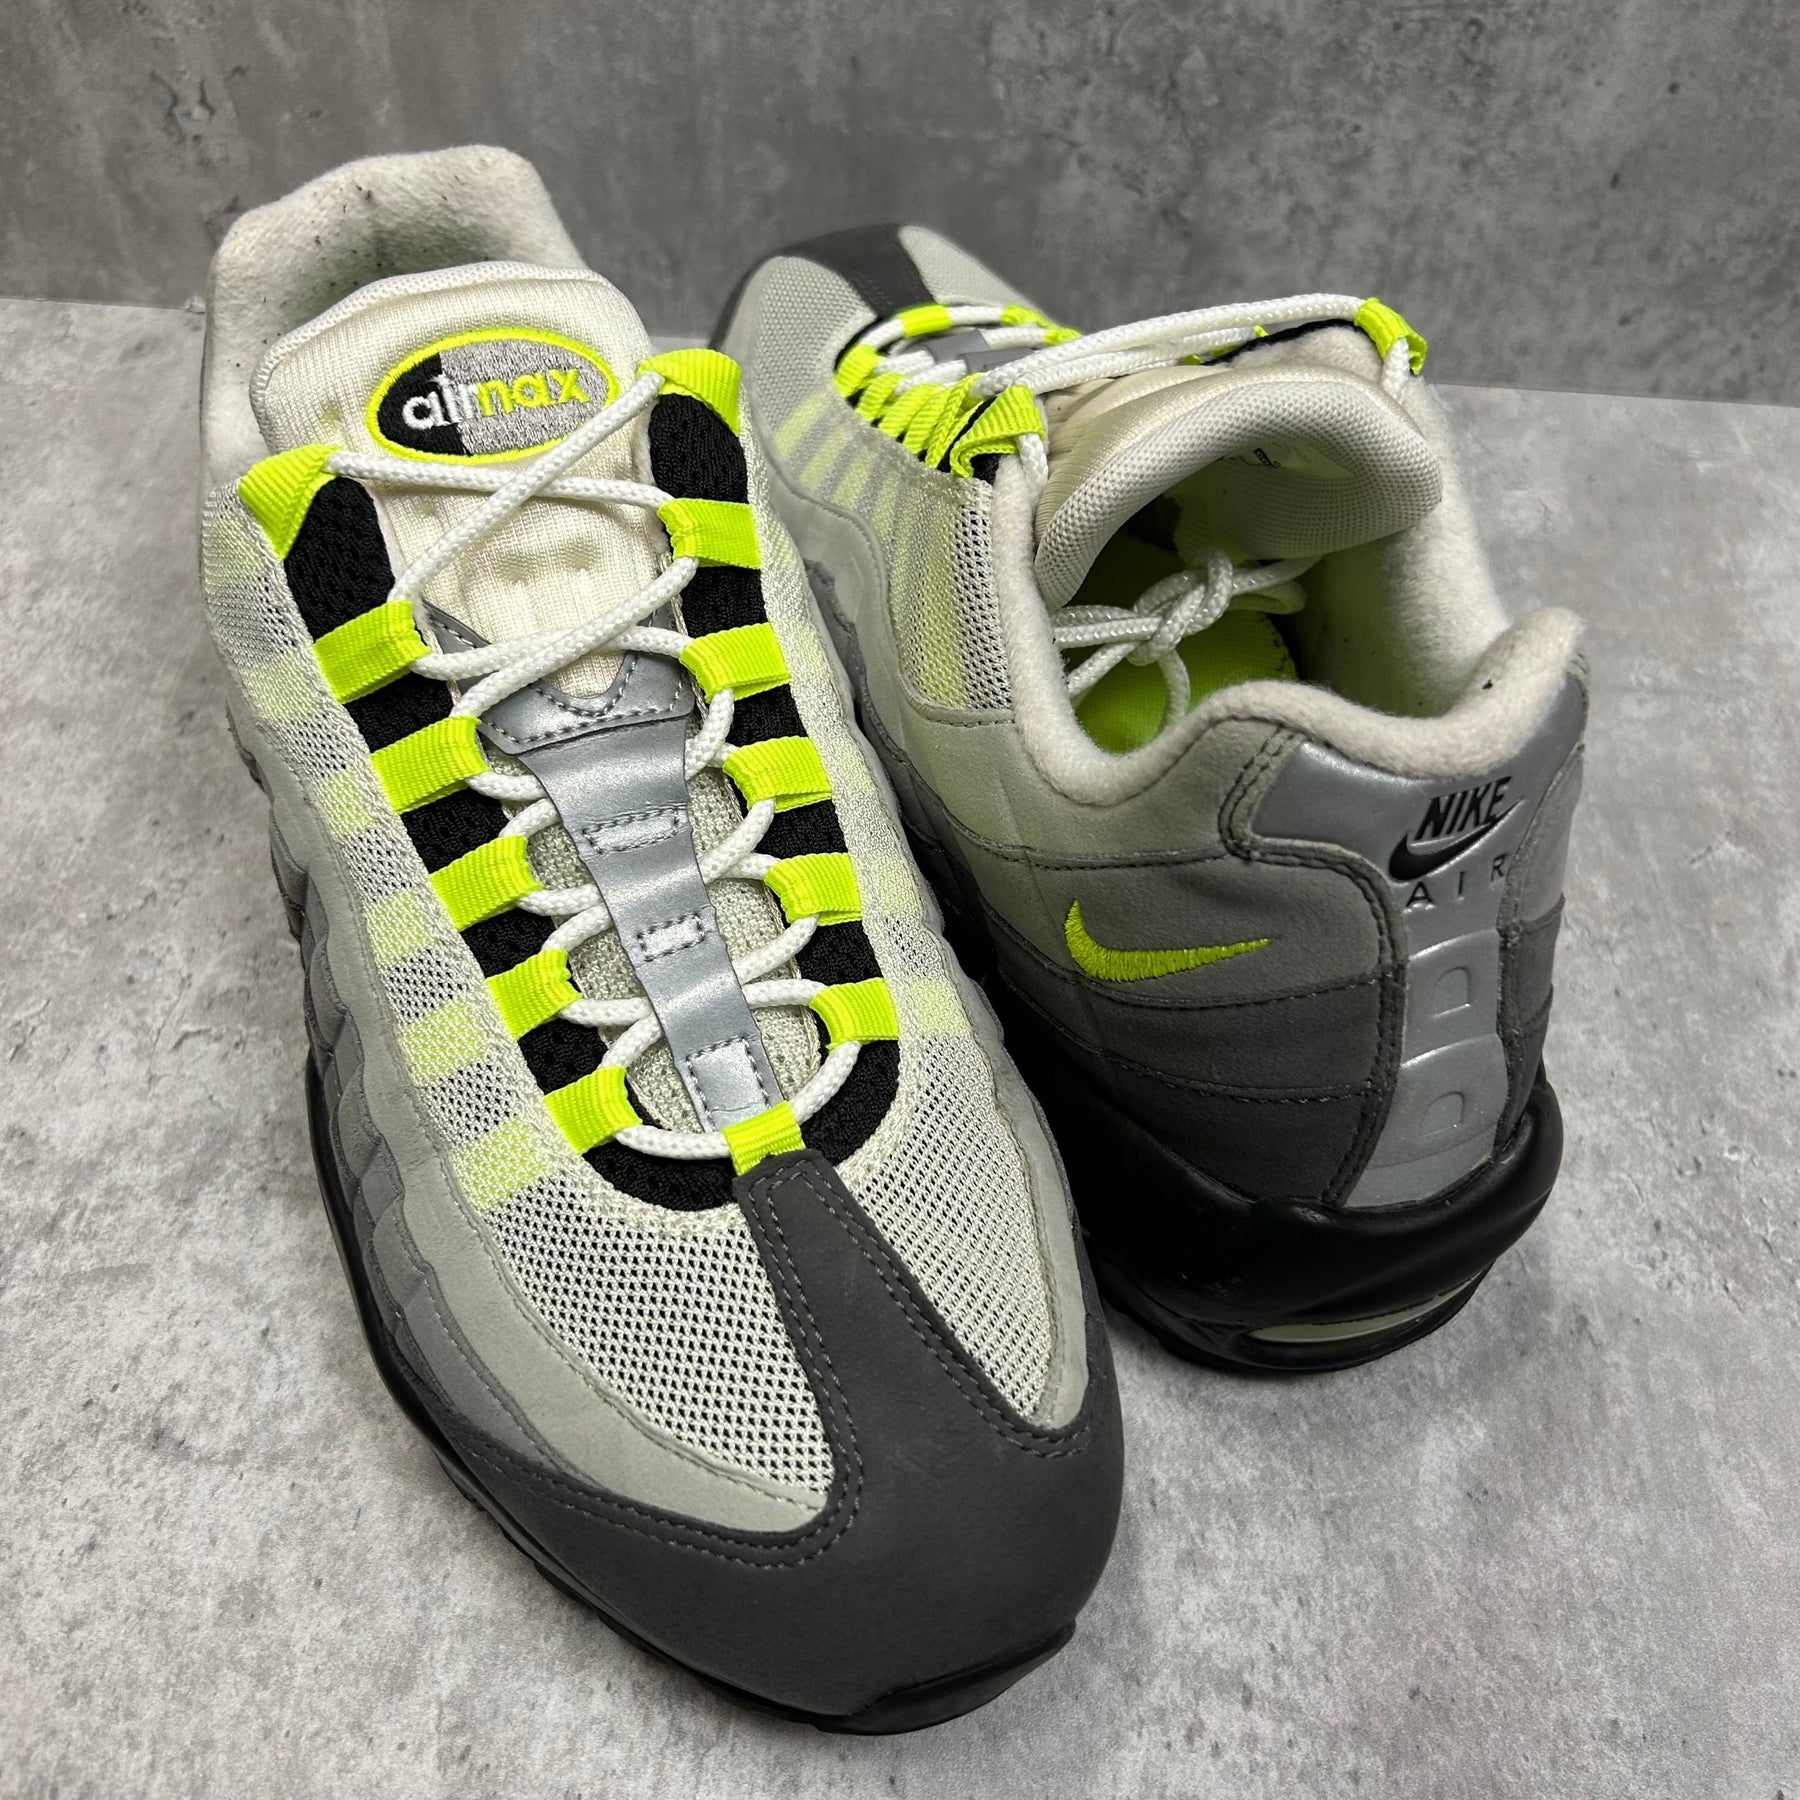 Nike Airmax 95 Neon 2015